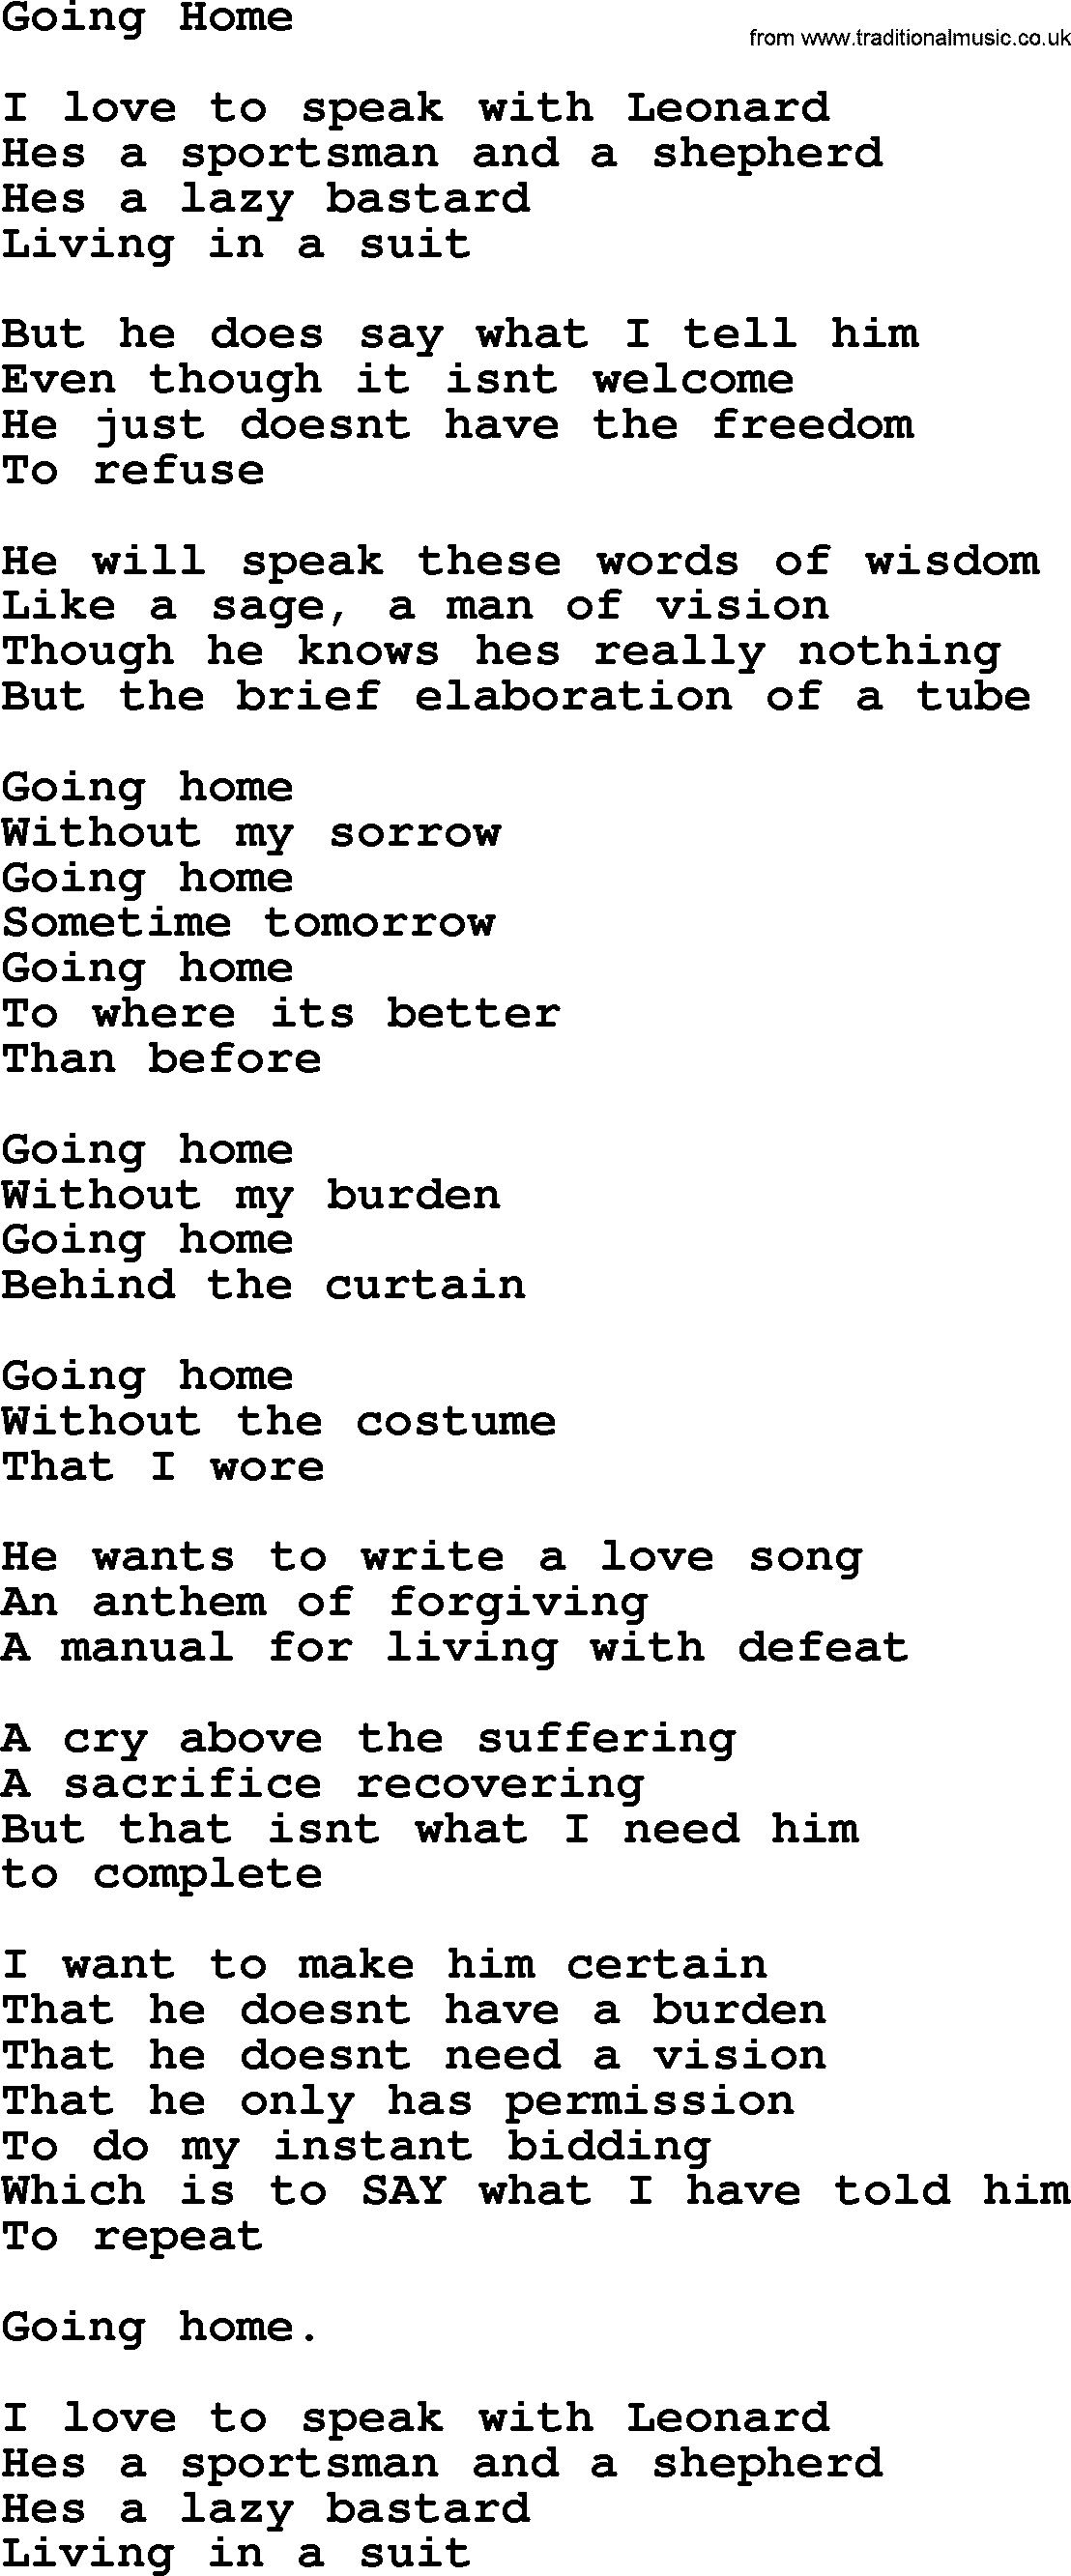 Leonard Cohen song Going Home-leonard-cohen.txt lyrics